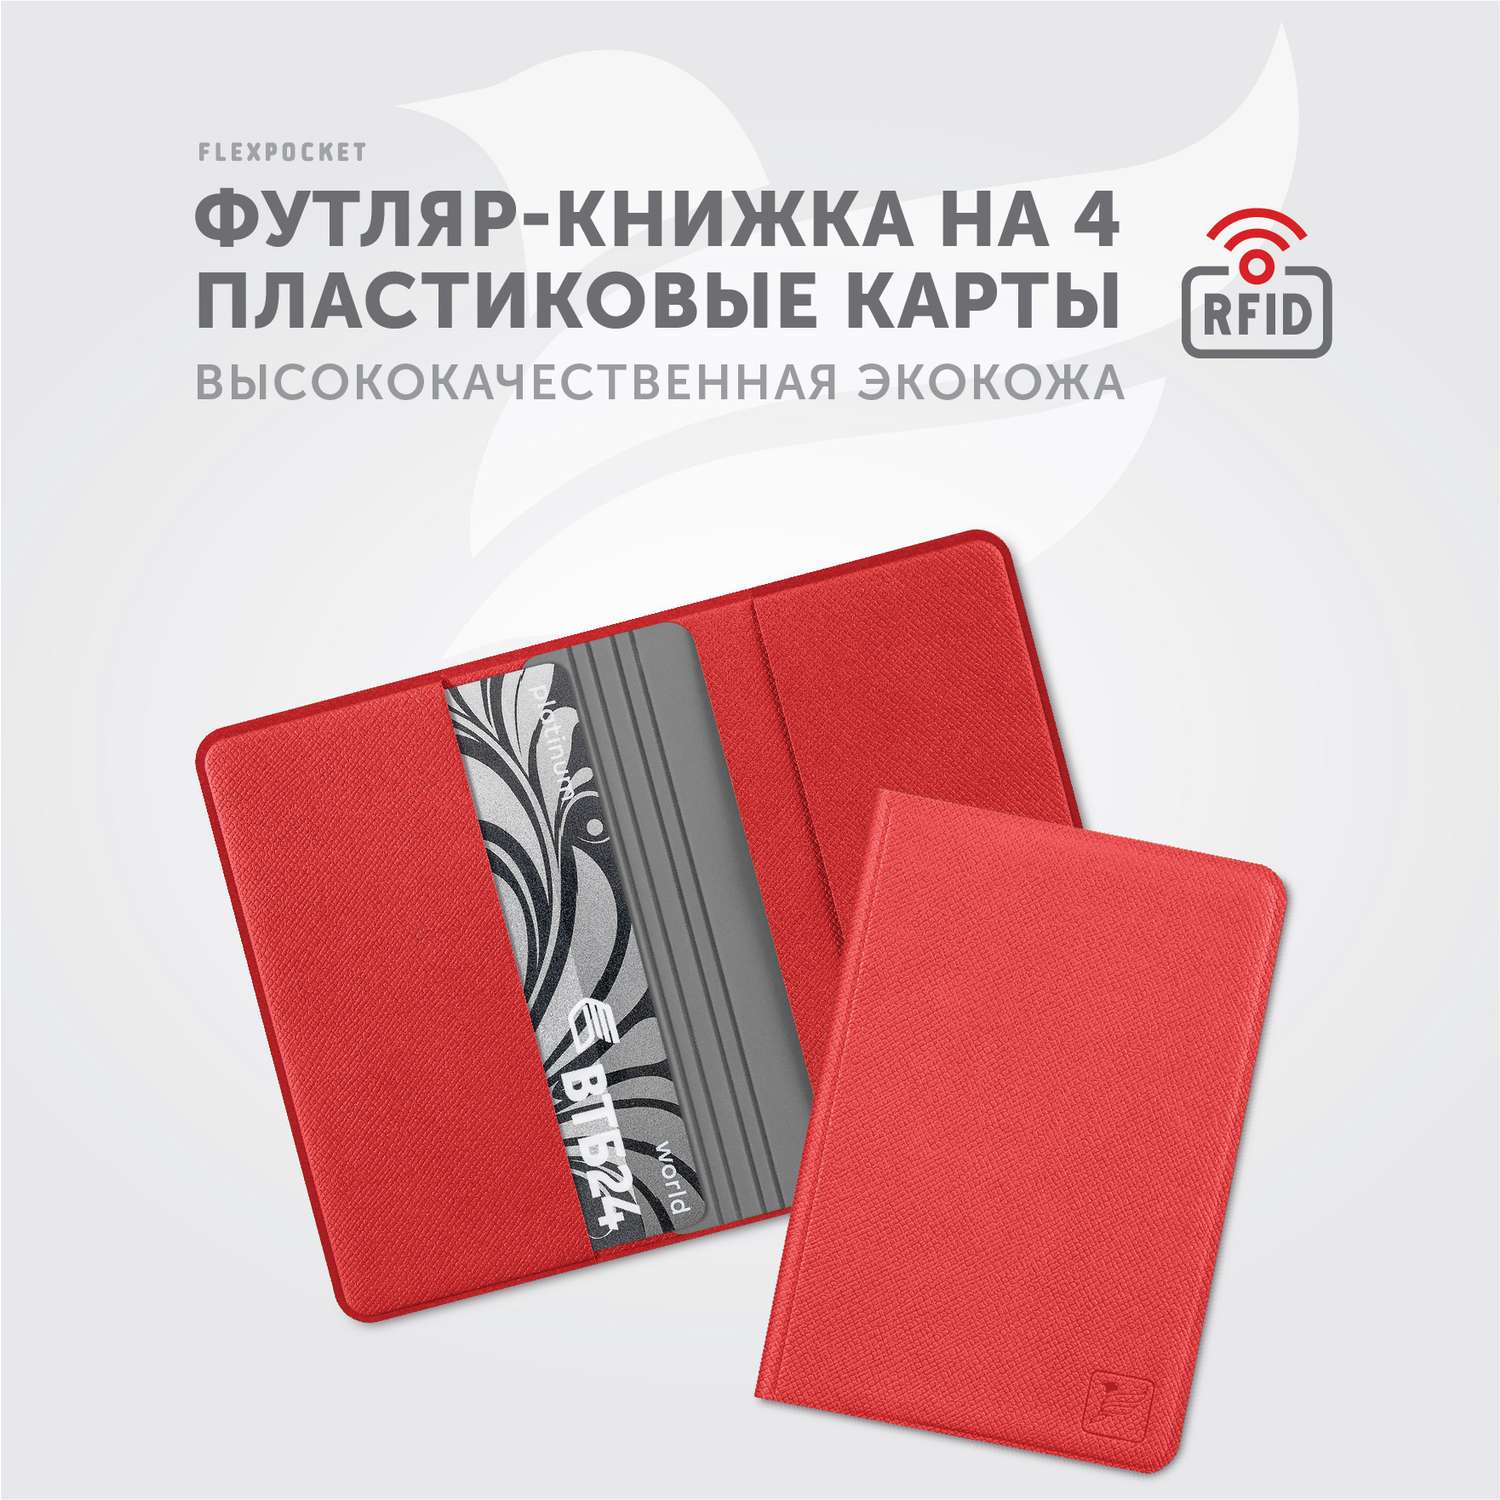 Картхолдер с RFID-защитой Flexpocket FKKR-4E/Красно-серый - фото 2